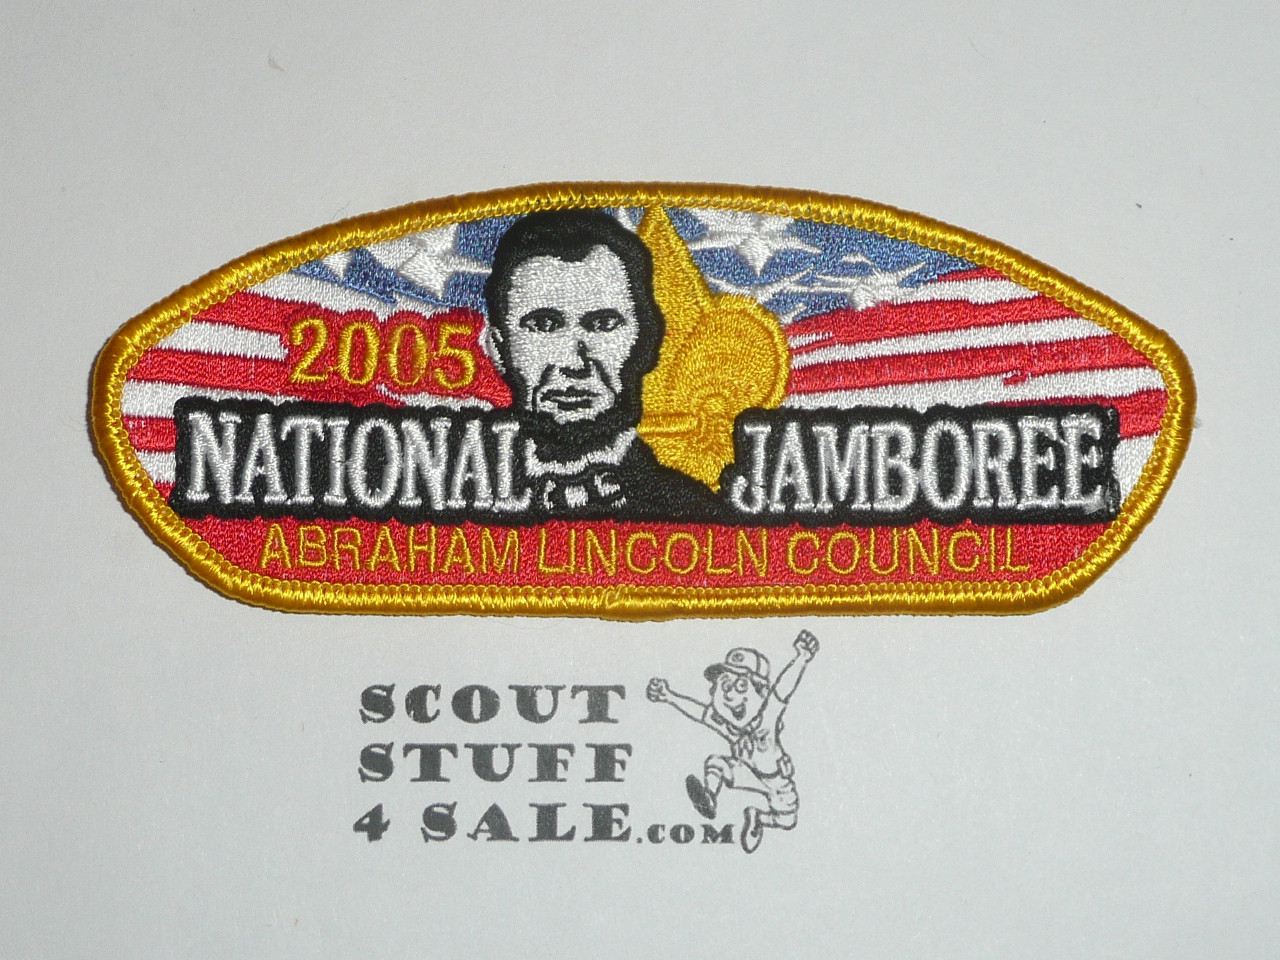 2005 National Jamboree JSP - Abraham Lincoln Council